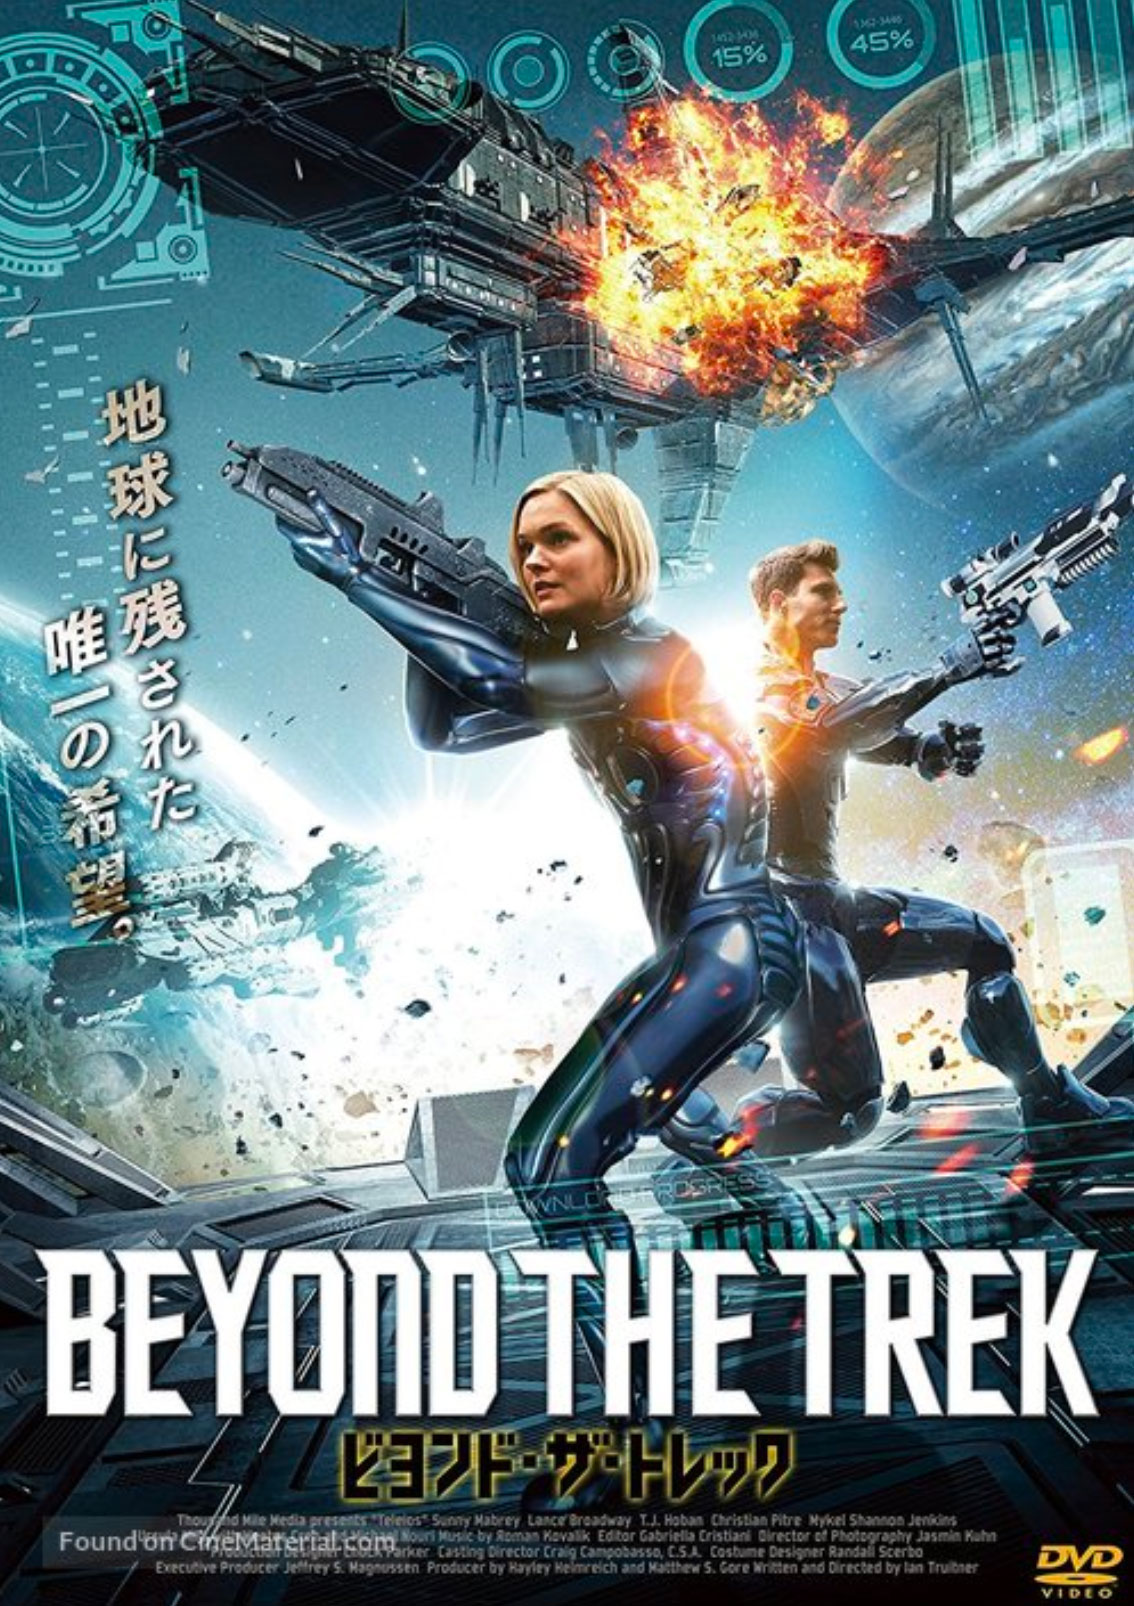 Beyond the Trek DVD cover